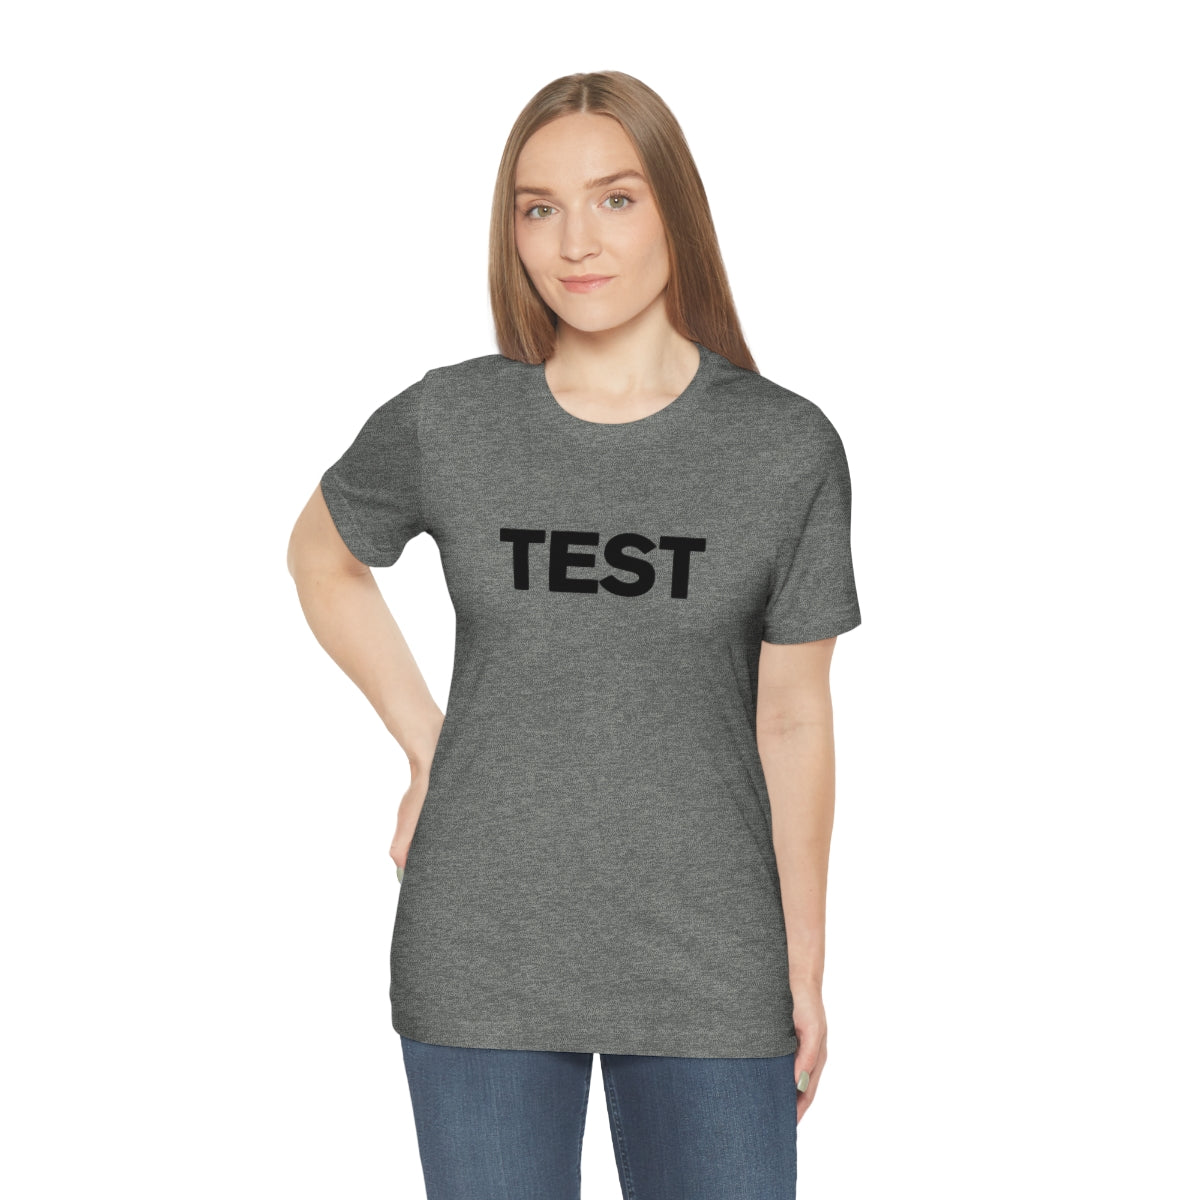 TEST - short sleeve